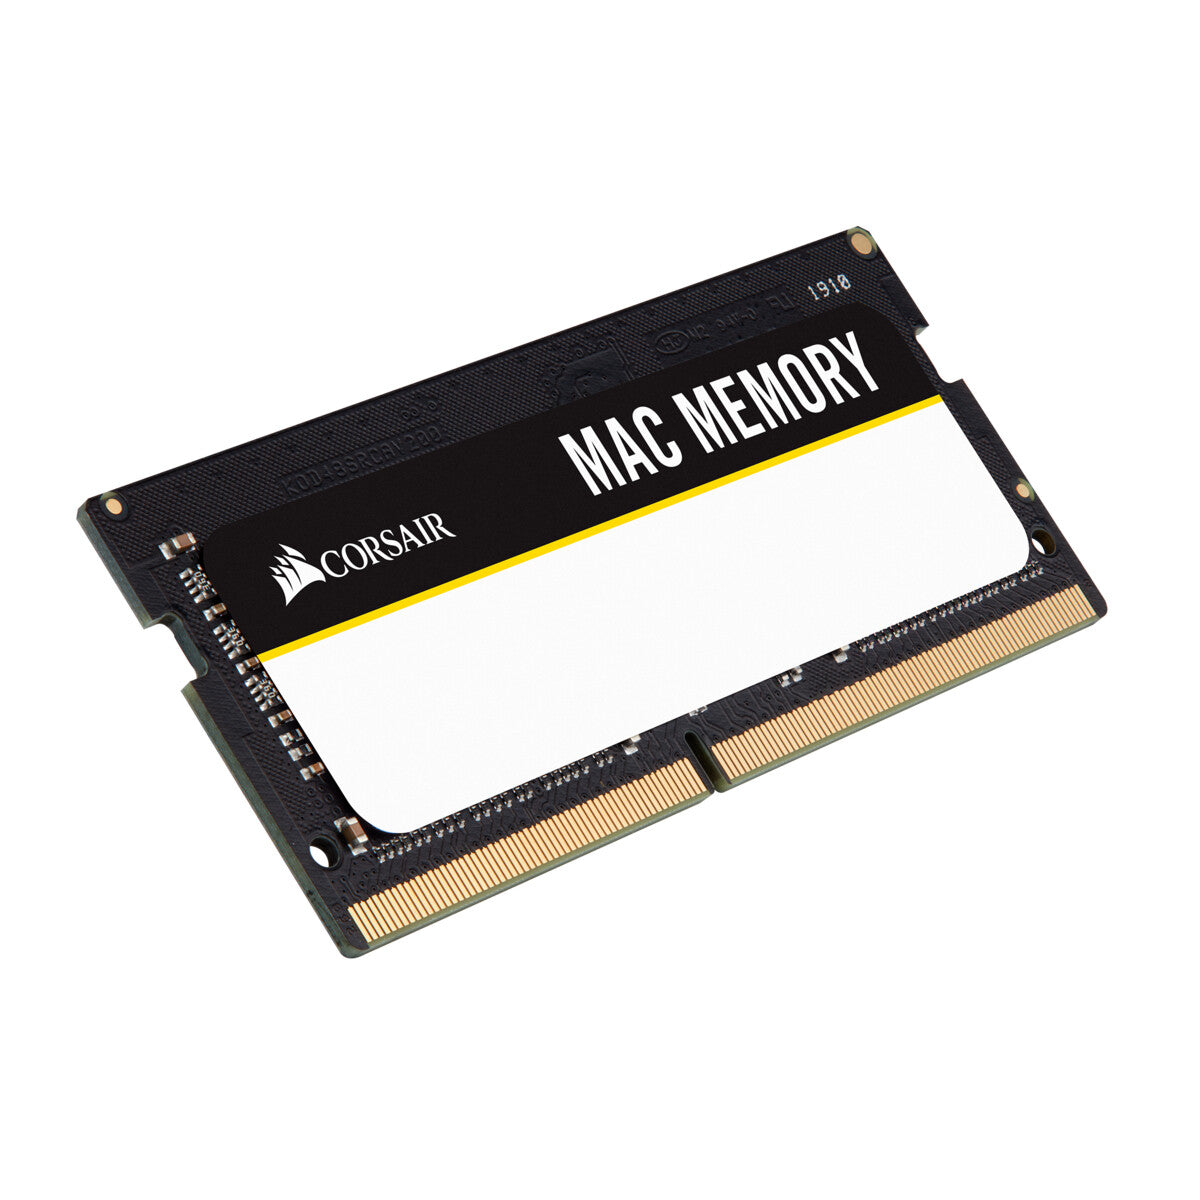 Corsair Mac Memory - 64 GB 2 x 32 GB DDR4 2666 MHz memory module